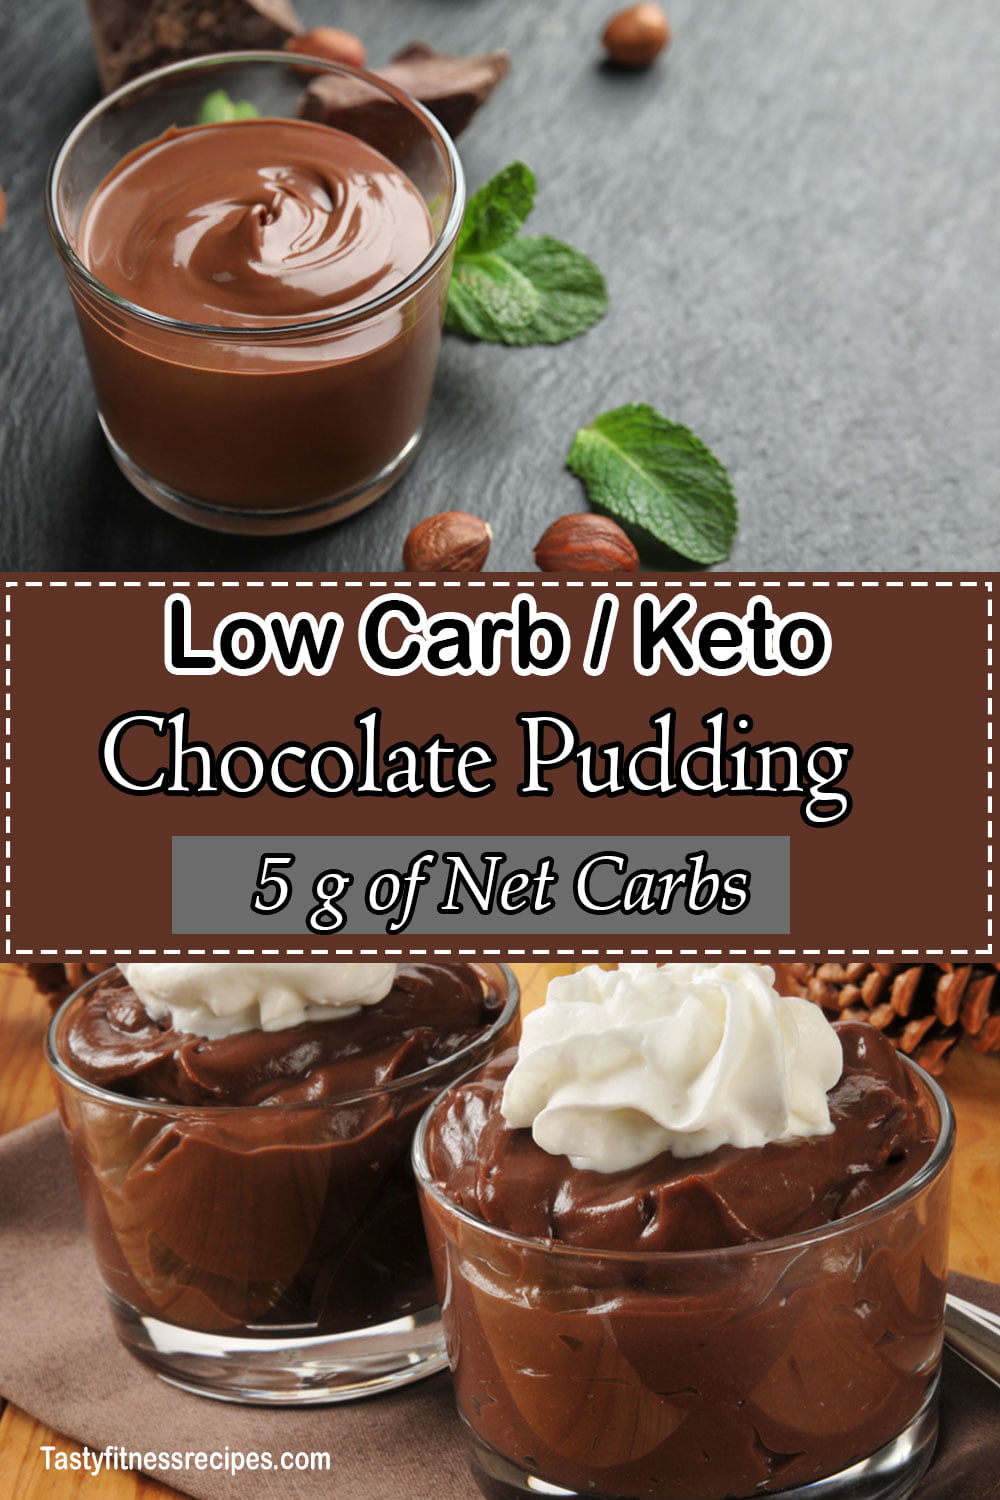 Low carb Keto Chocolate Pudding